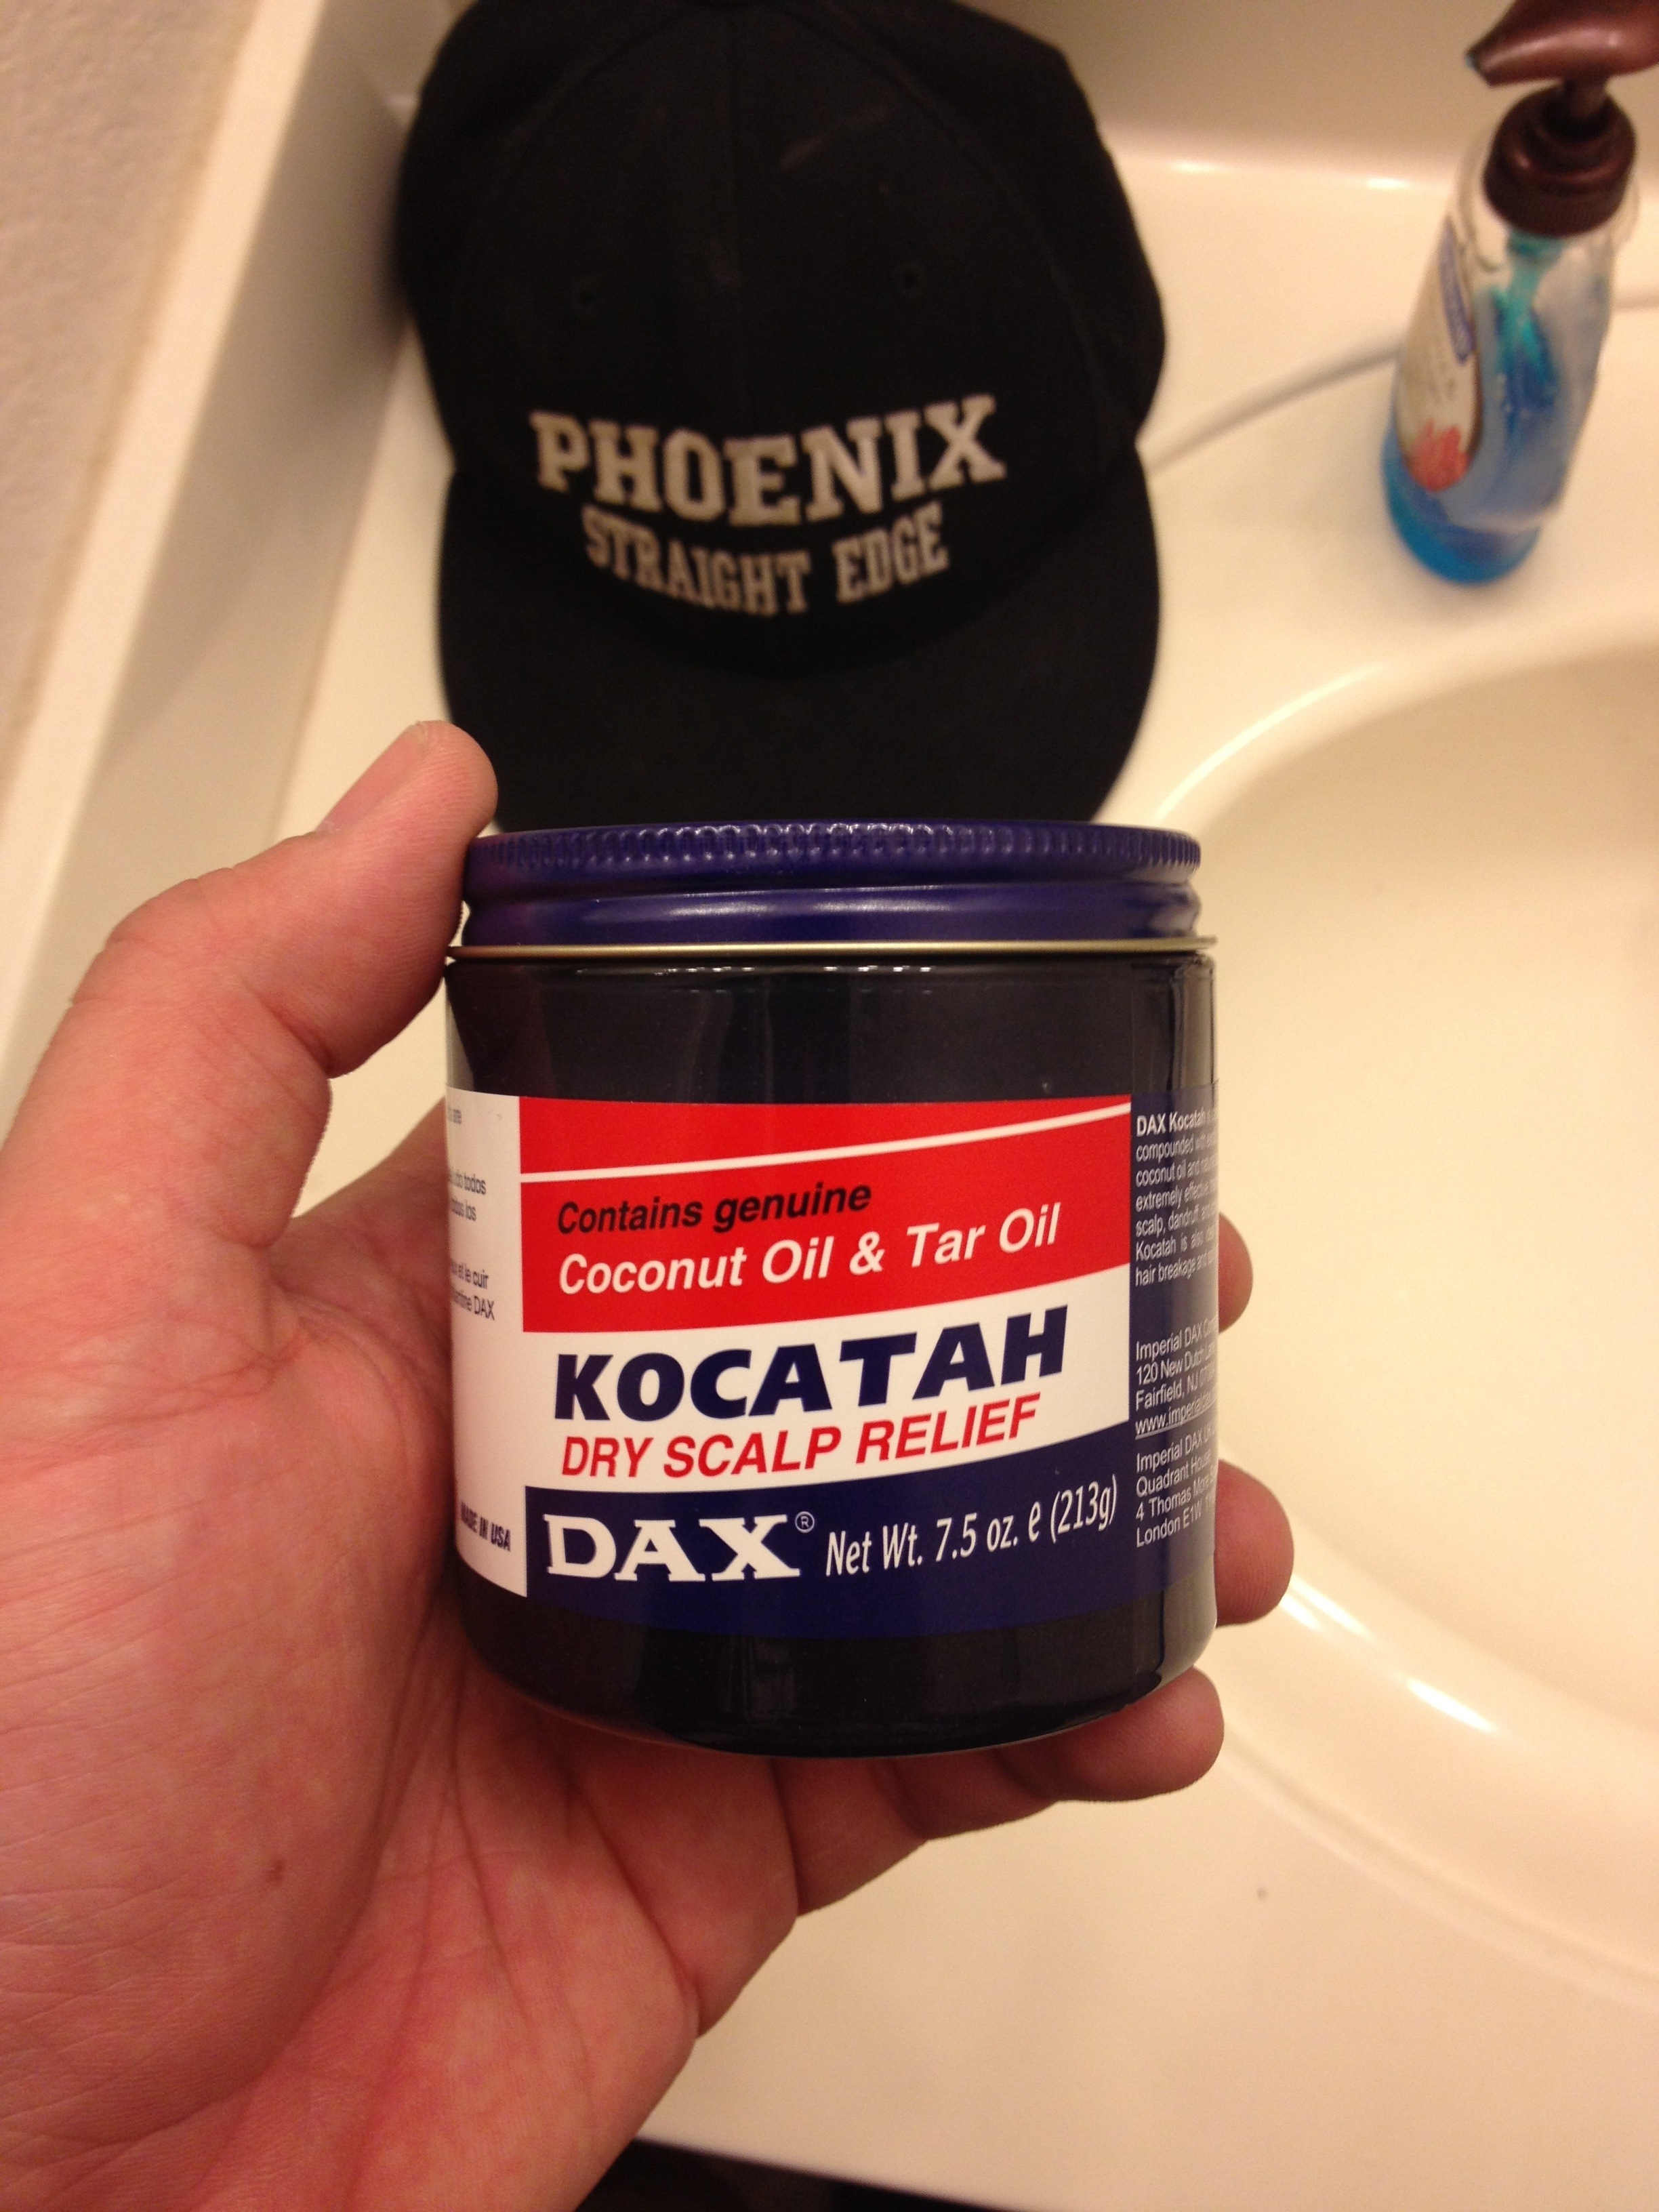 DAX Hair Care - I LOVE the Dax Kocatah & Coconut oil